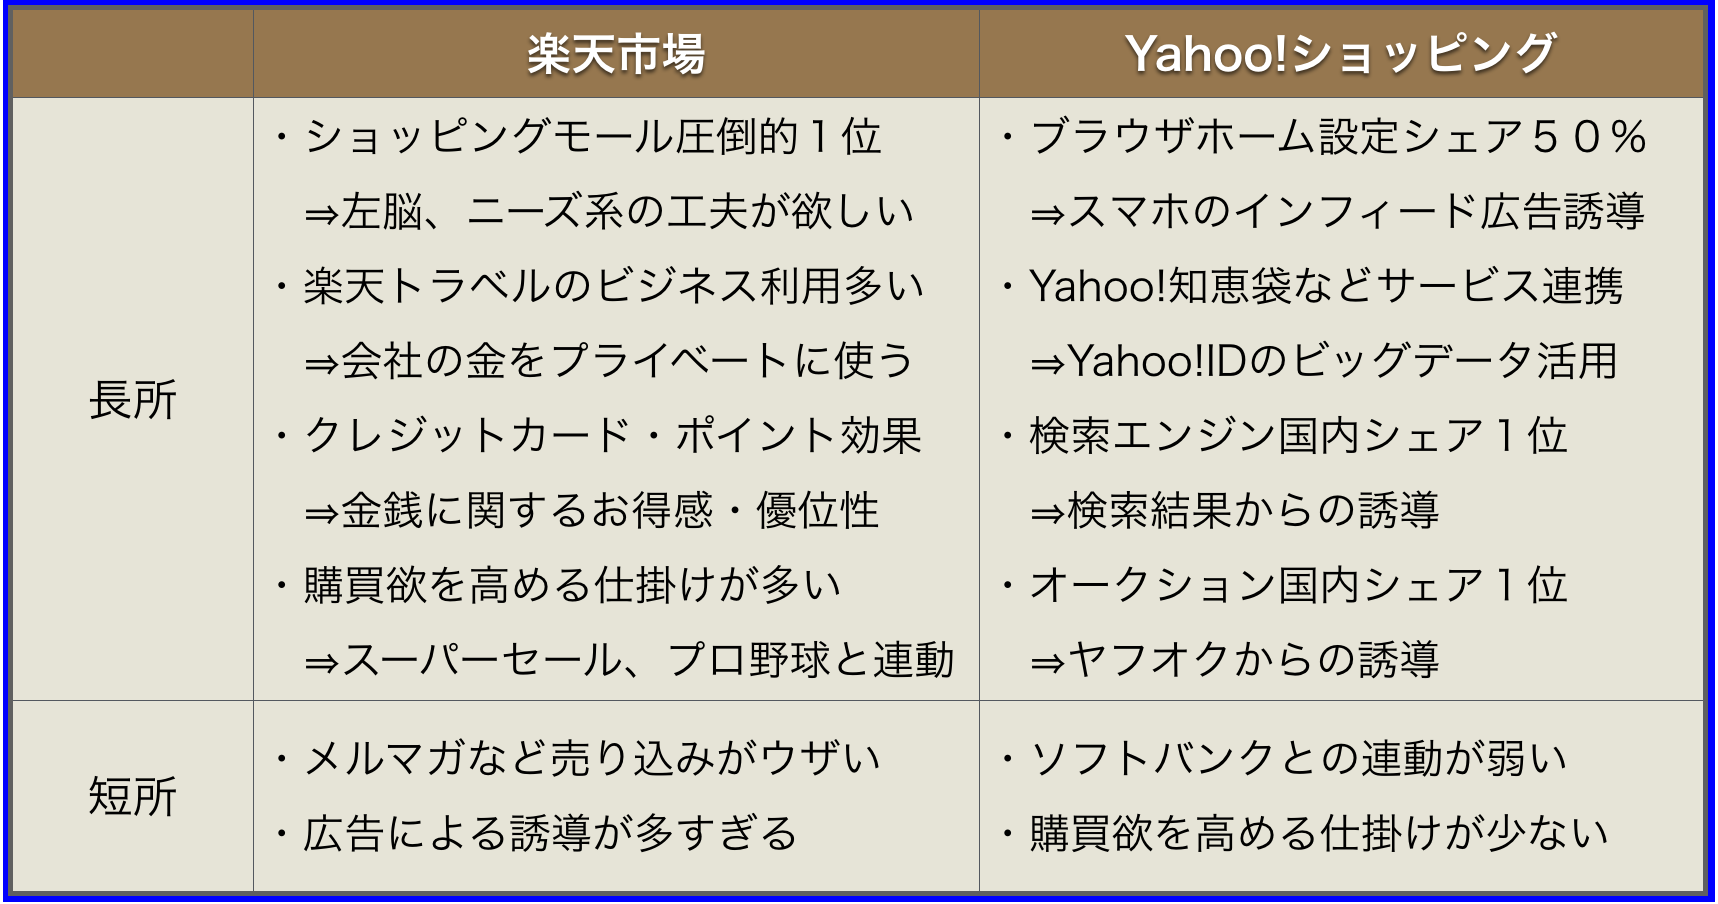 Yahoo!ショッピングは楽天市場を抜き201x年に日本一へ？